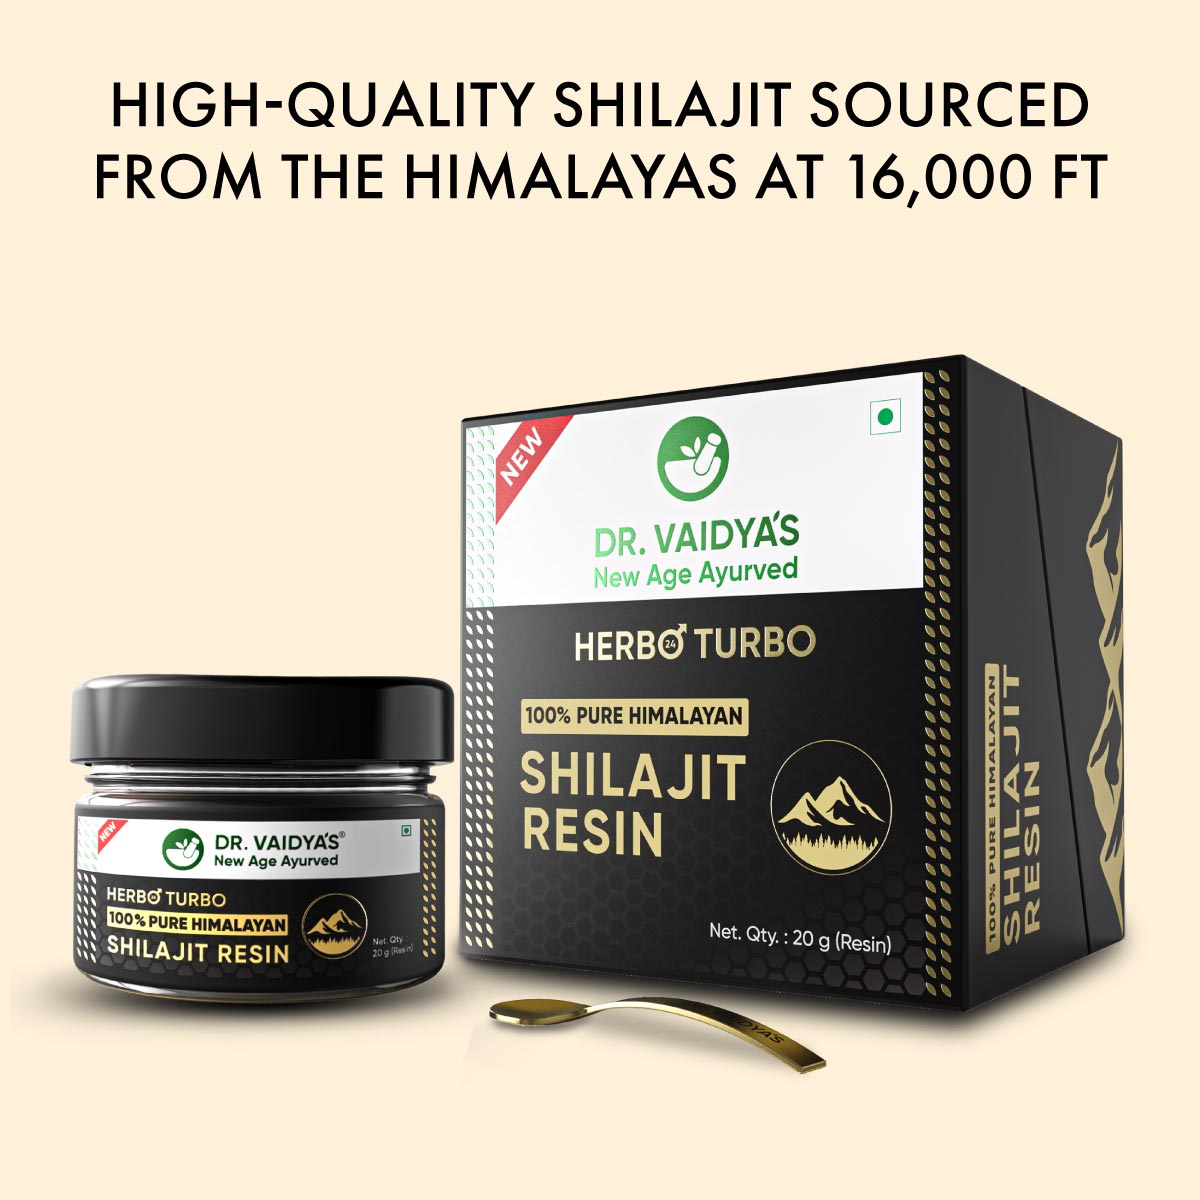 Herbo24Turbo Shilajit Resin: Made From 100% Pure Himalayan Shilajit